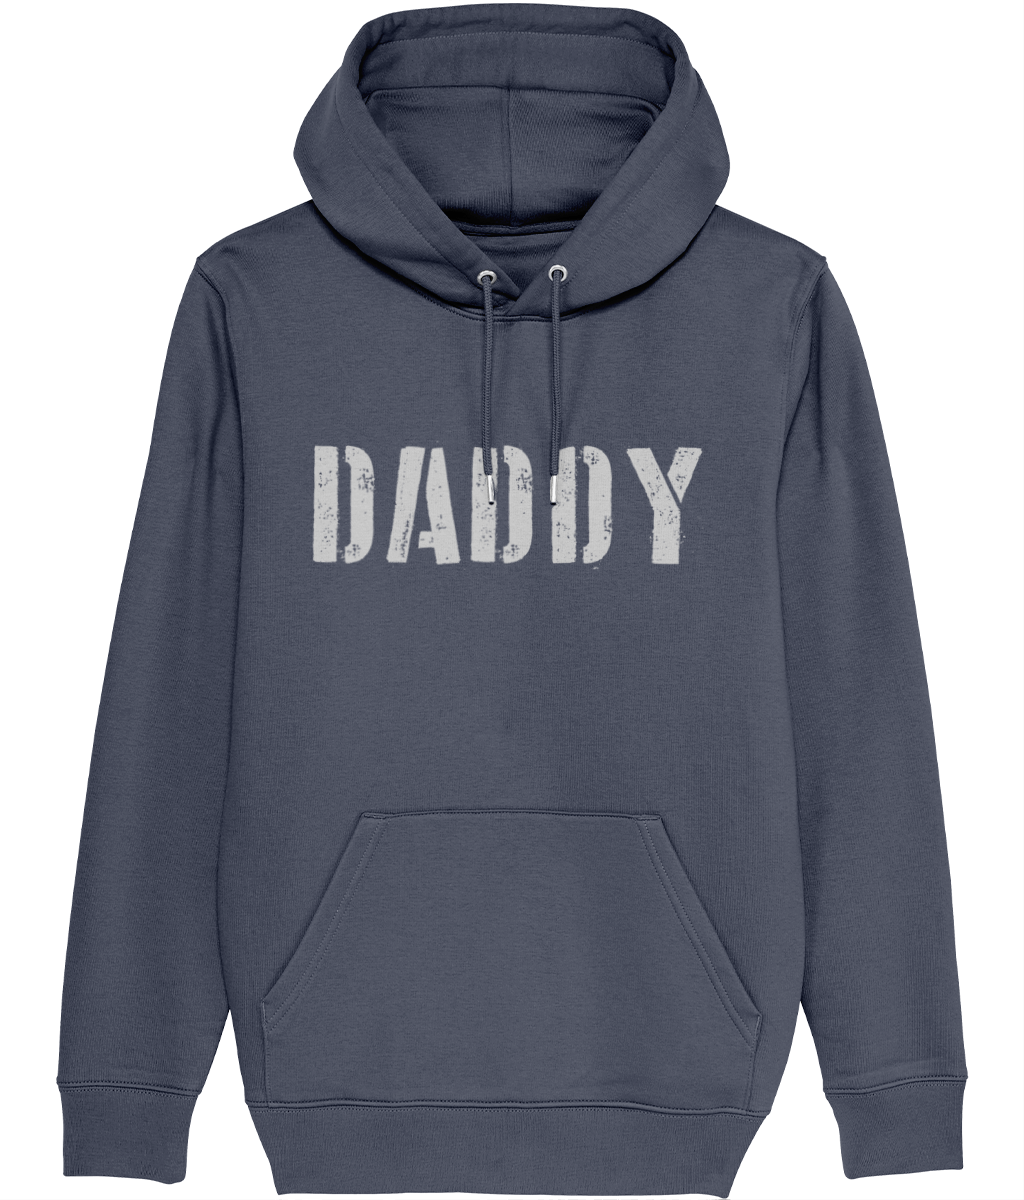 Daddy Organic Hoody Sweatshirt